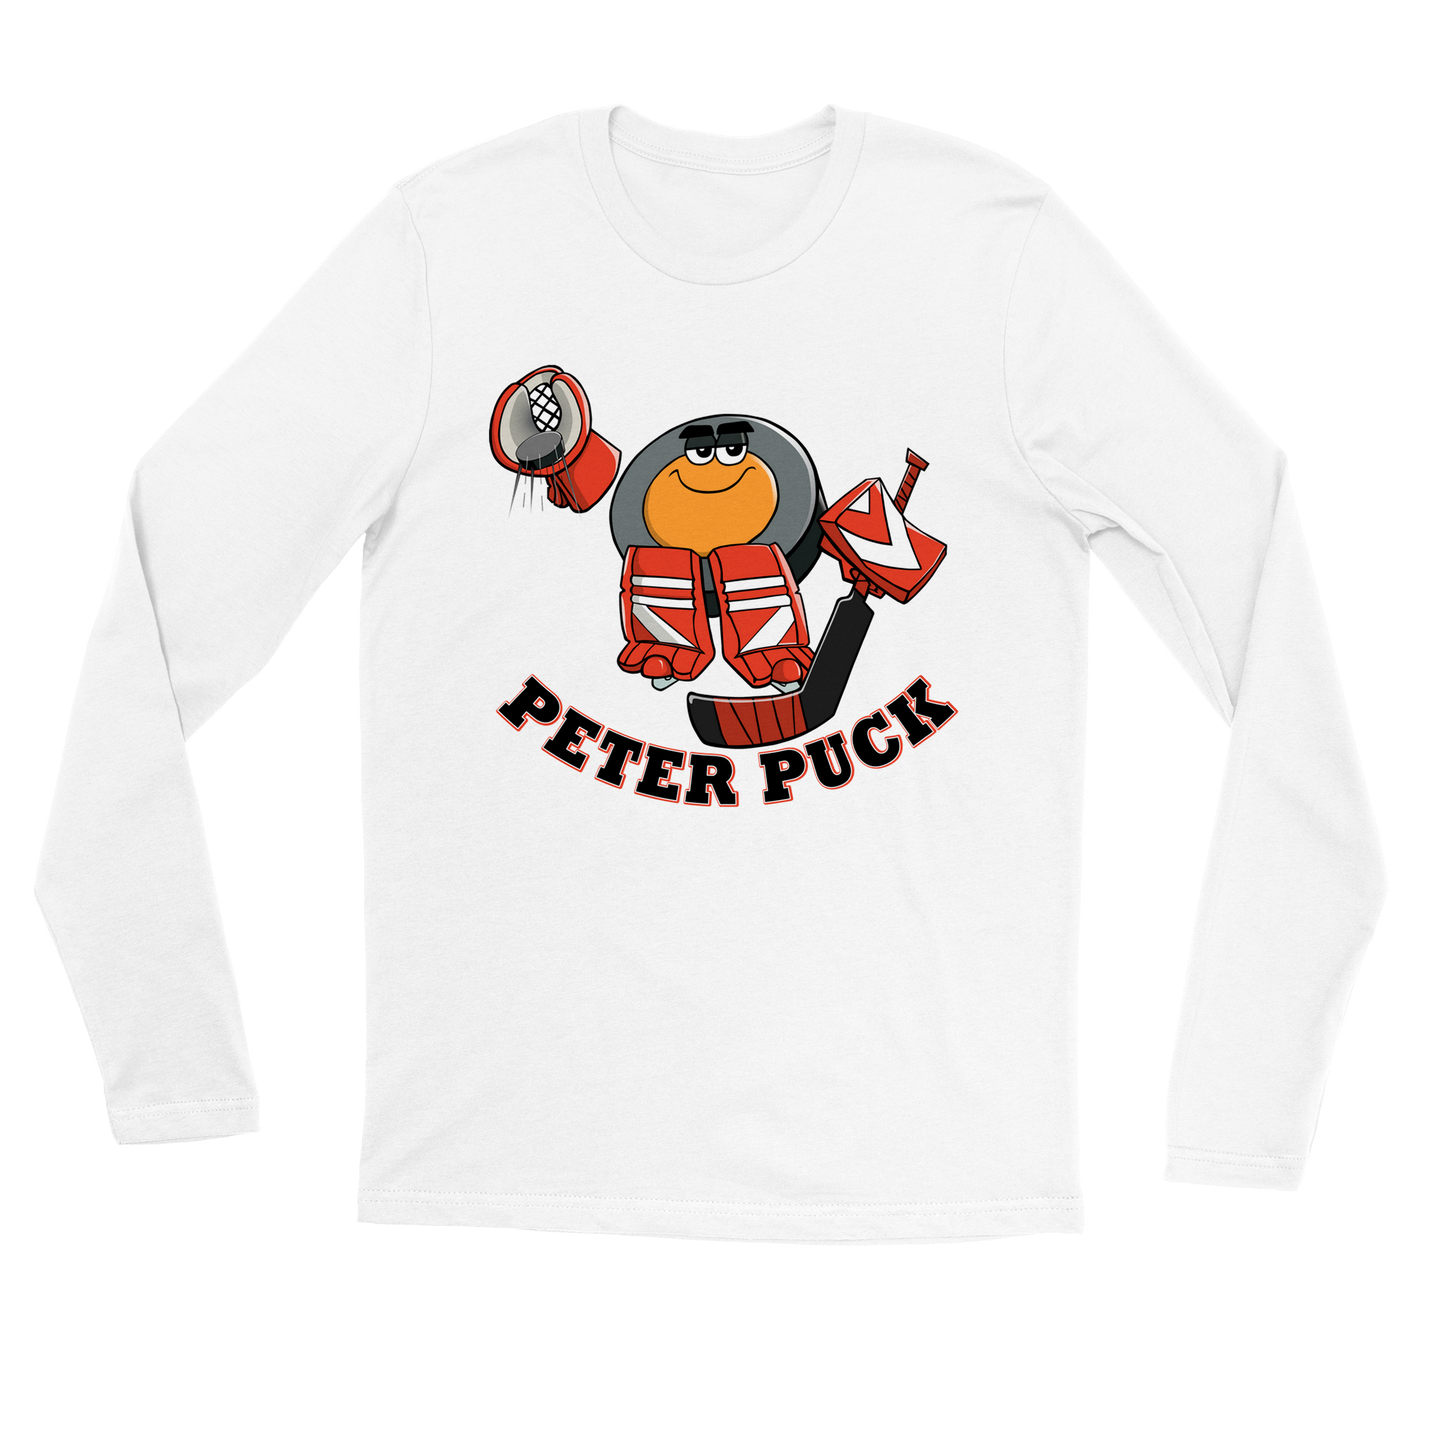 Peter Puck Goalie Save Premium Mens Longsleeve T-shirt